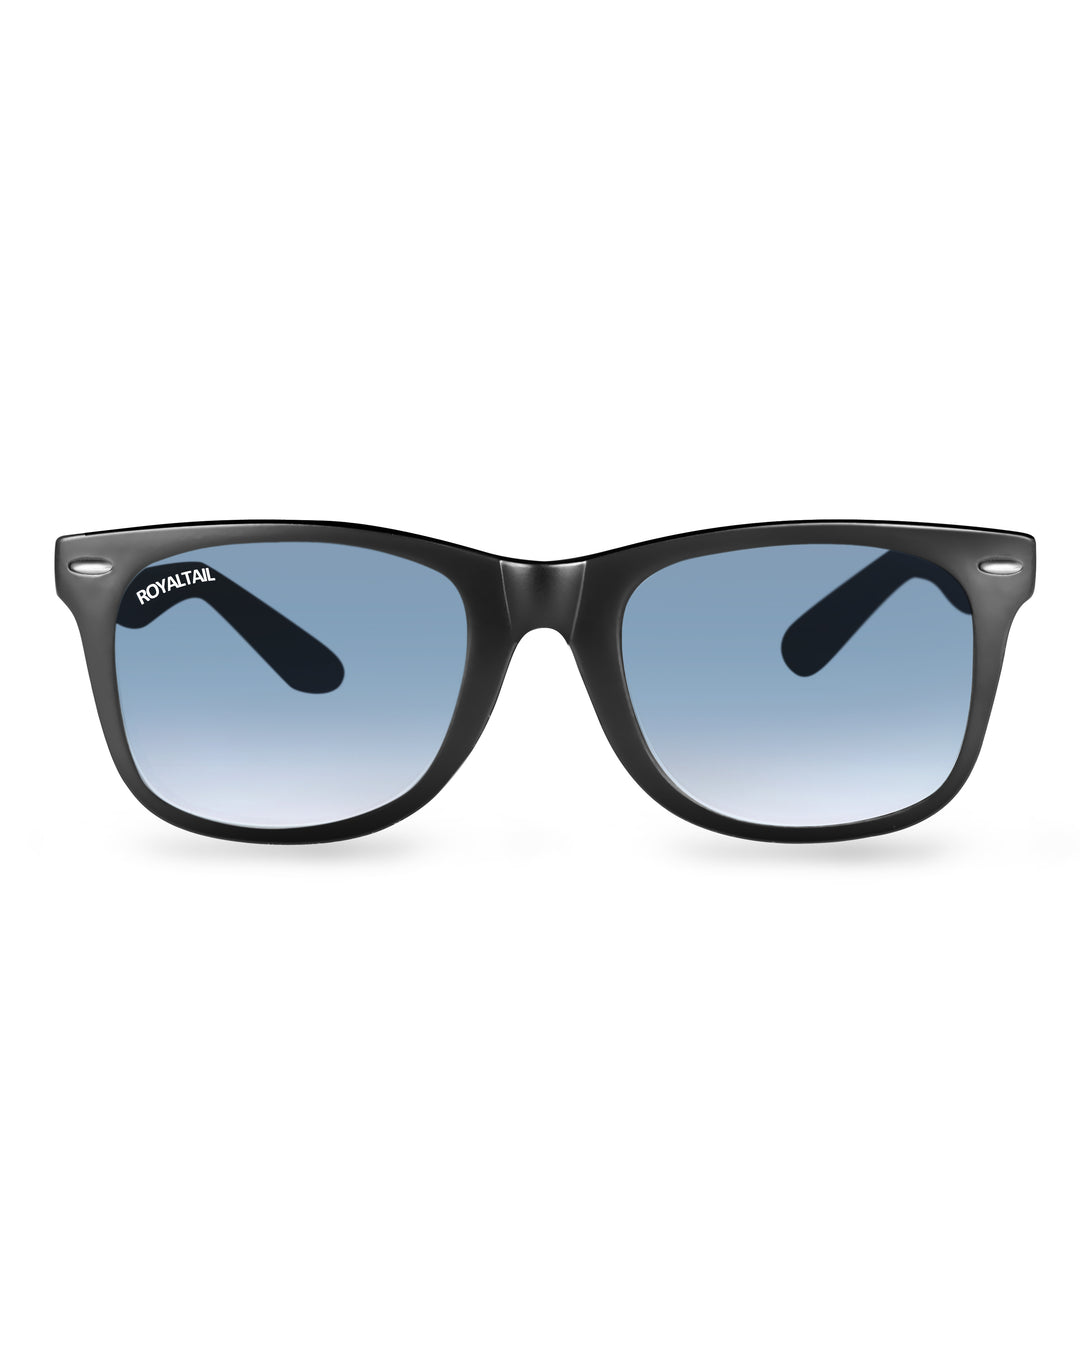 royaltail black blue sunglasses wayfarer